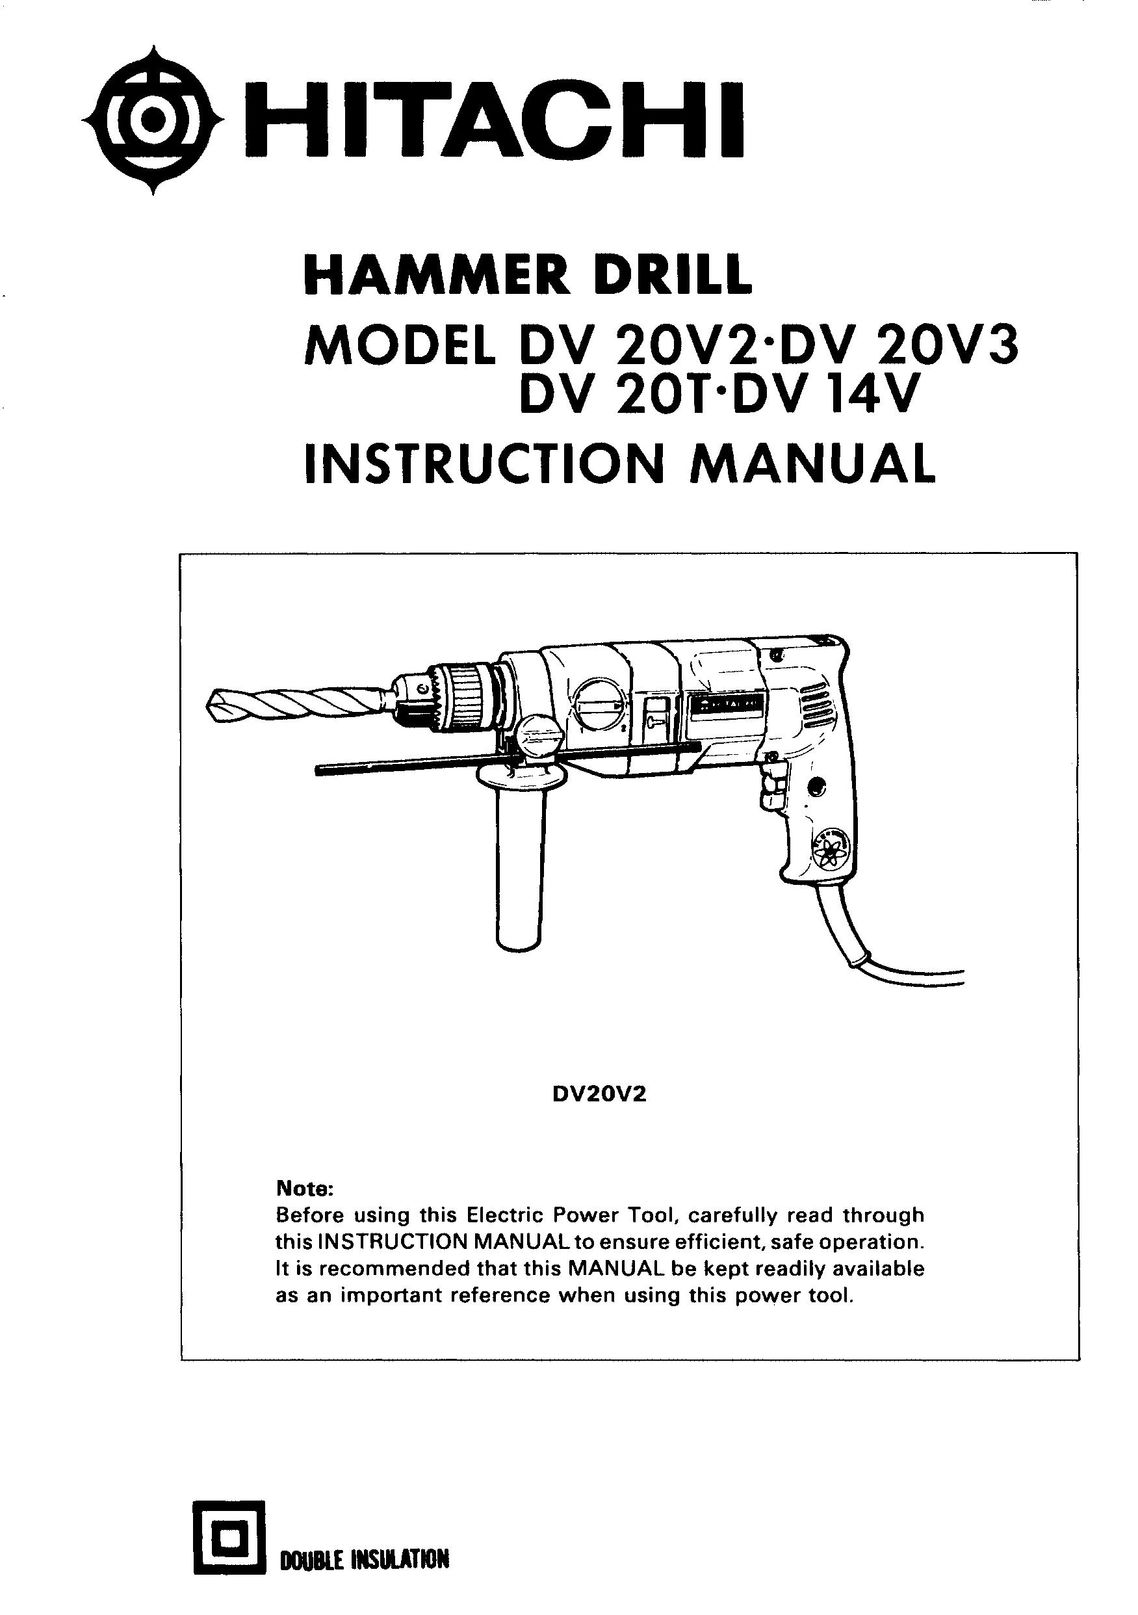 Hitachi DV 20V2 Cordless Drill User Manual